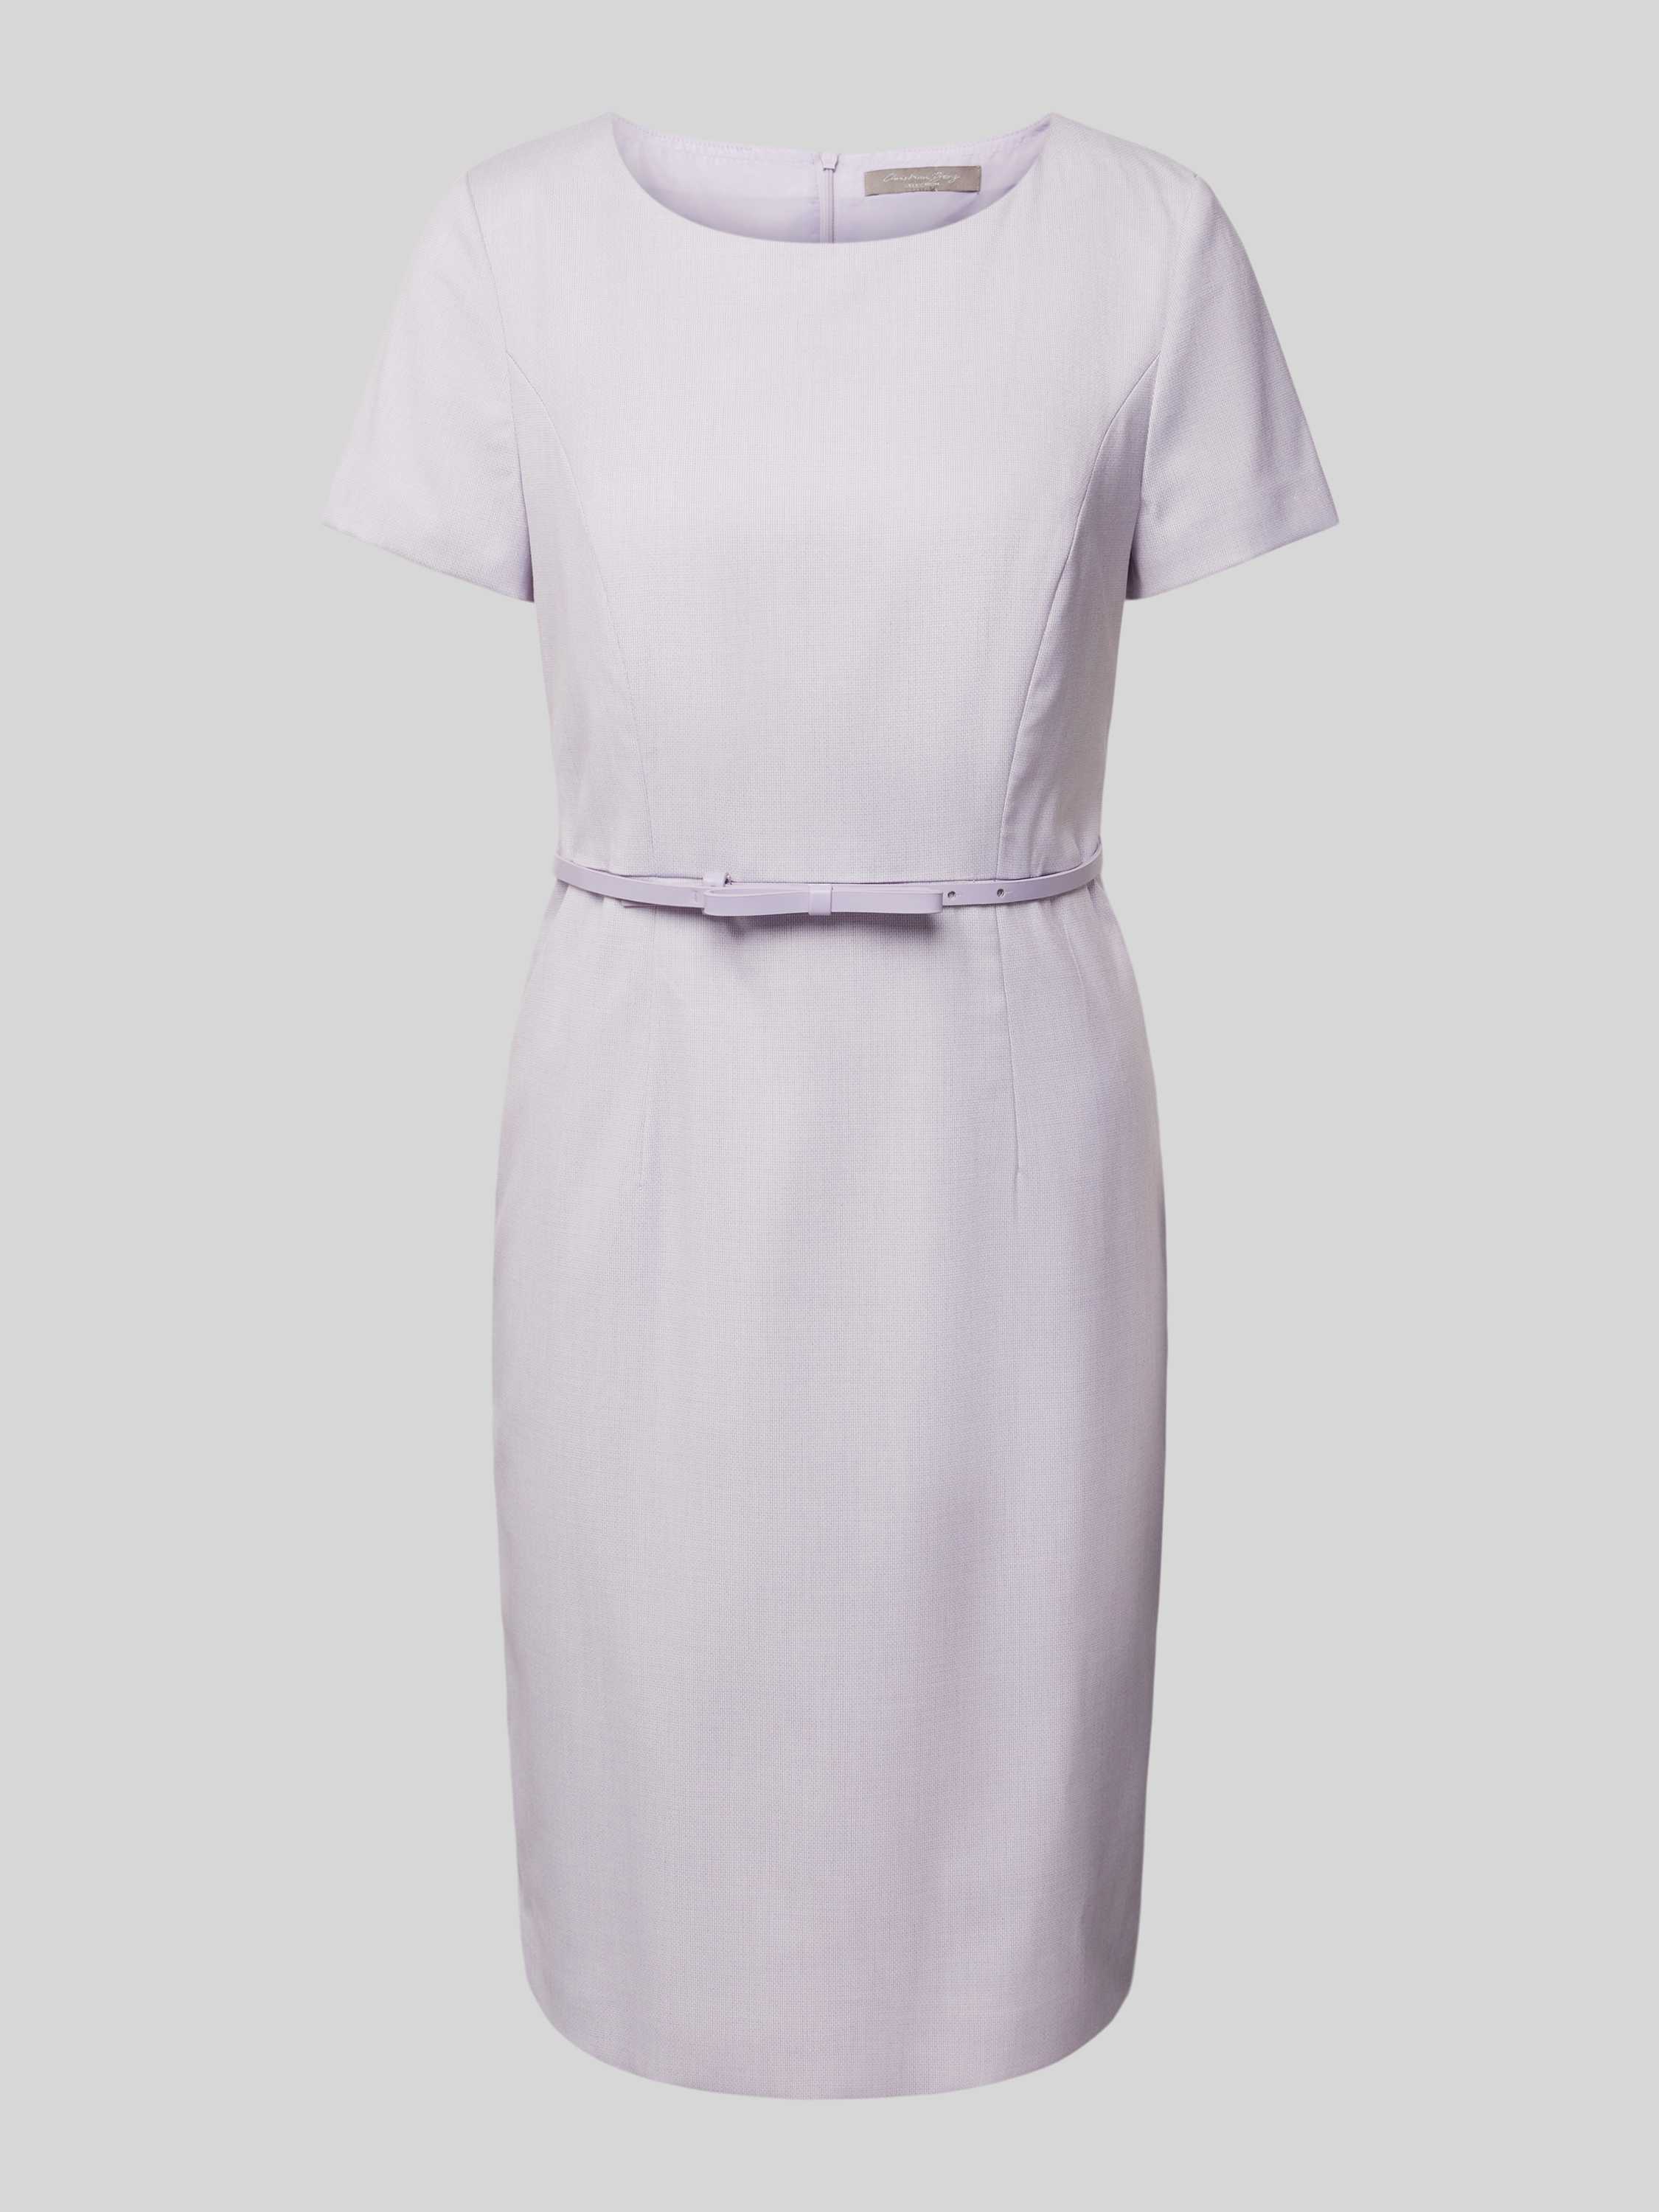 Christian Berg Woman Selection Knielange jurk met structuurmotief